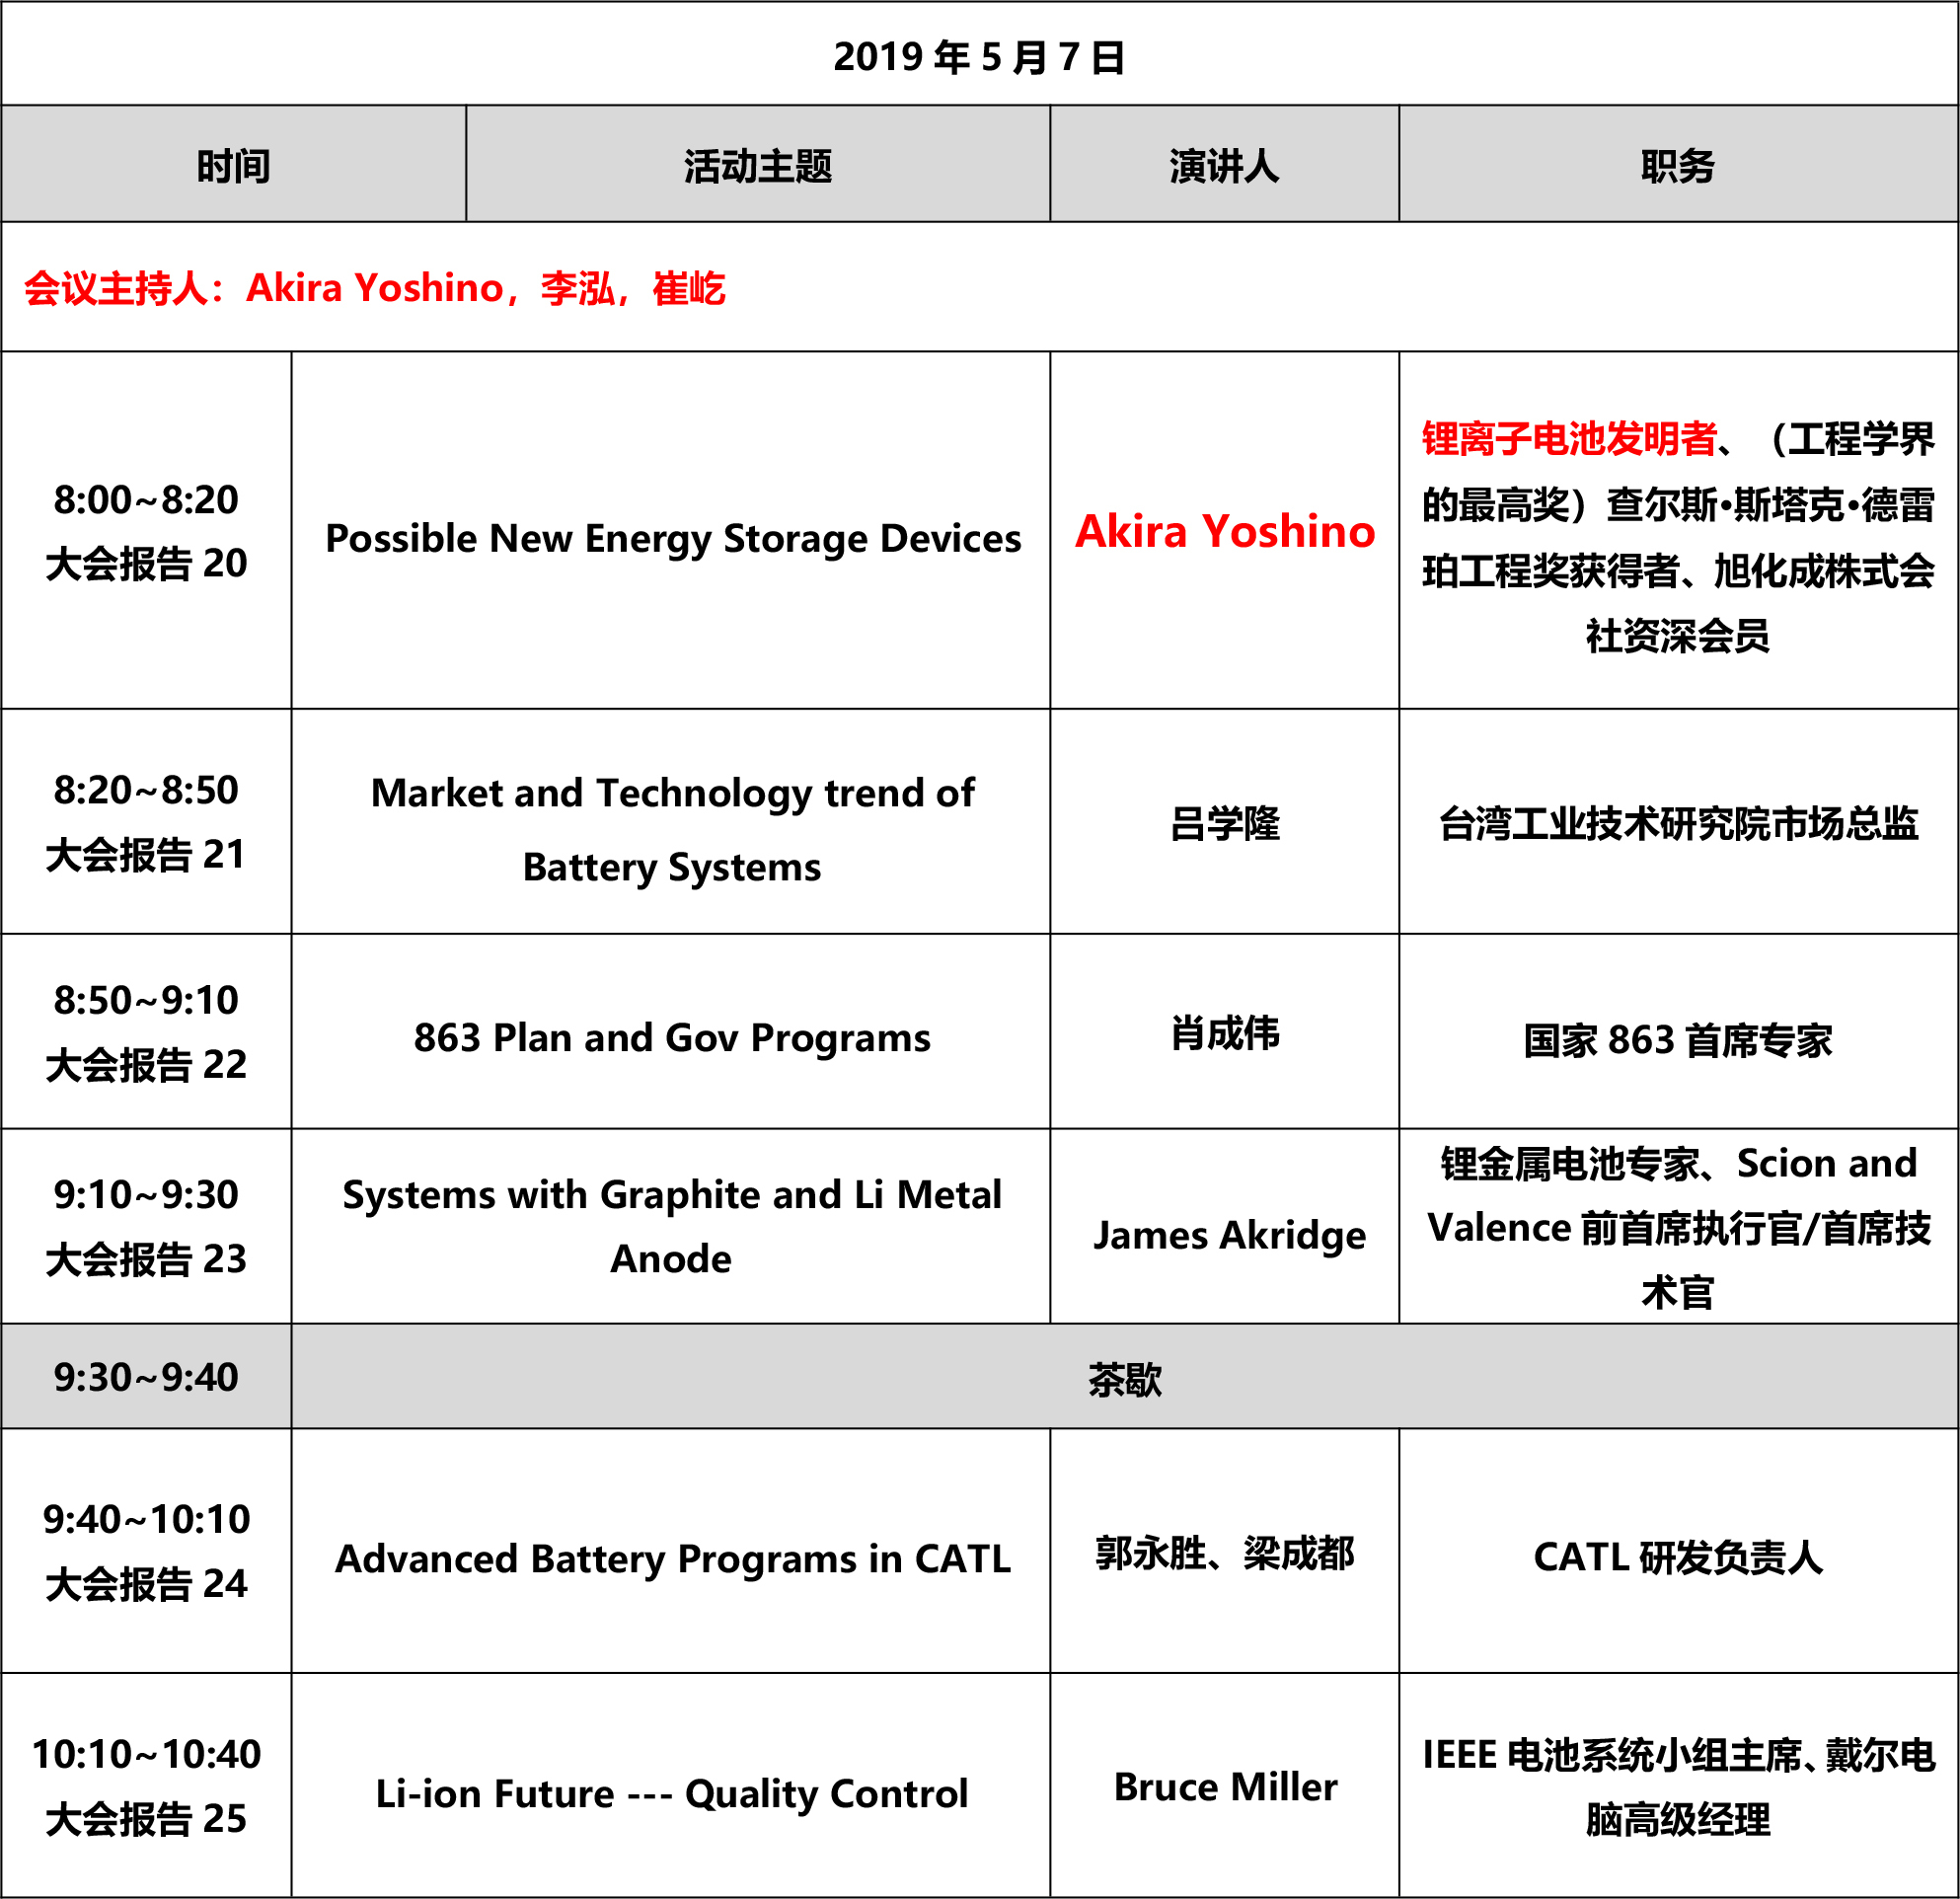 LBIS2019 第四届全球锂电科学技术研讨会 暨第九届华南锂电（国际）高层论坛